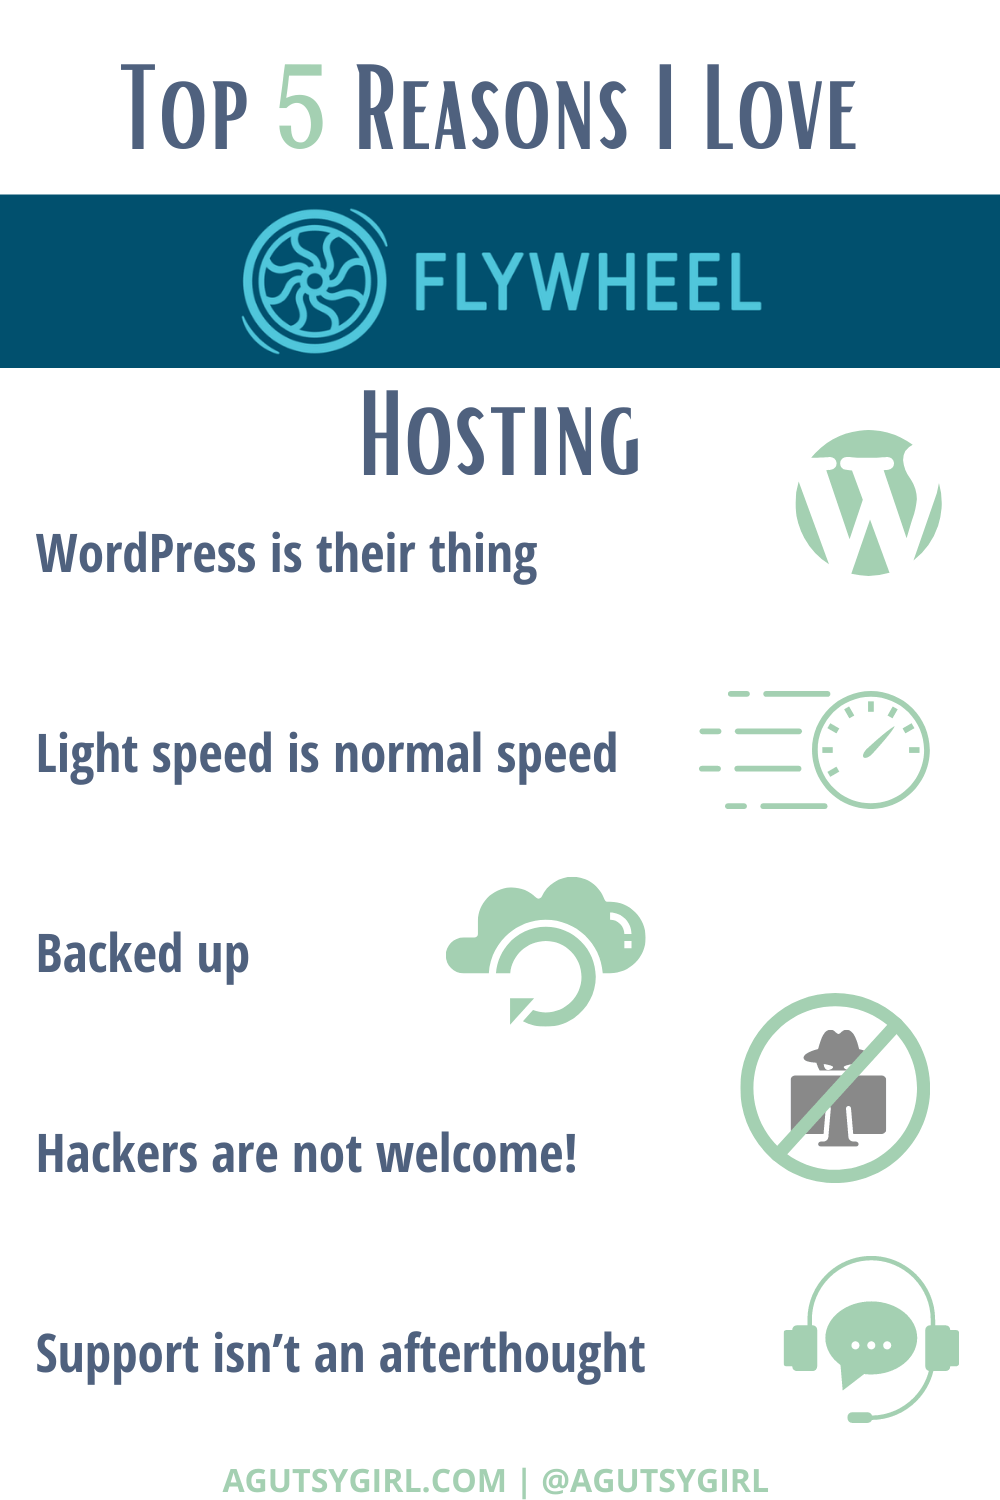 How to Start a Blog agutsygirl.com #blogging #howtostartablog #onlinebusiness top 5 reasons I love Flywheel hosting